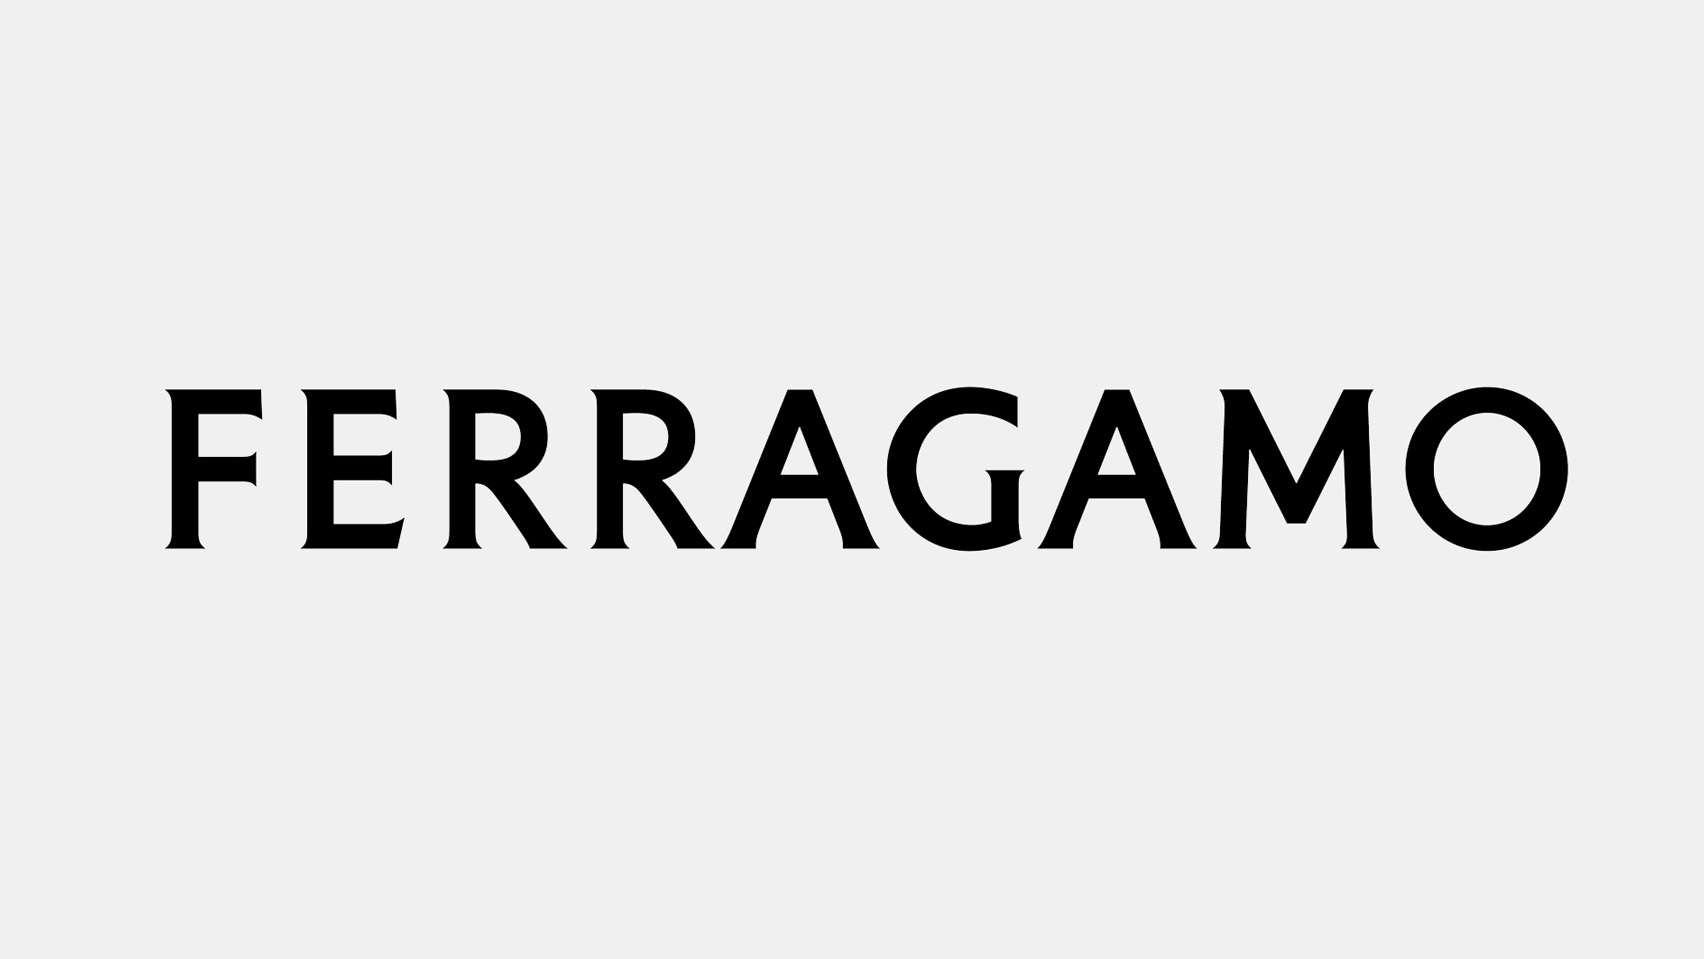 Peter Saville updates Ferragamo brand identity with custom typeface